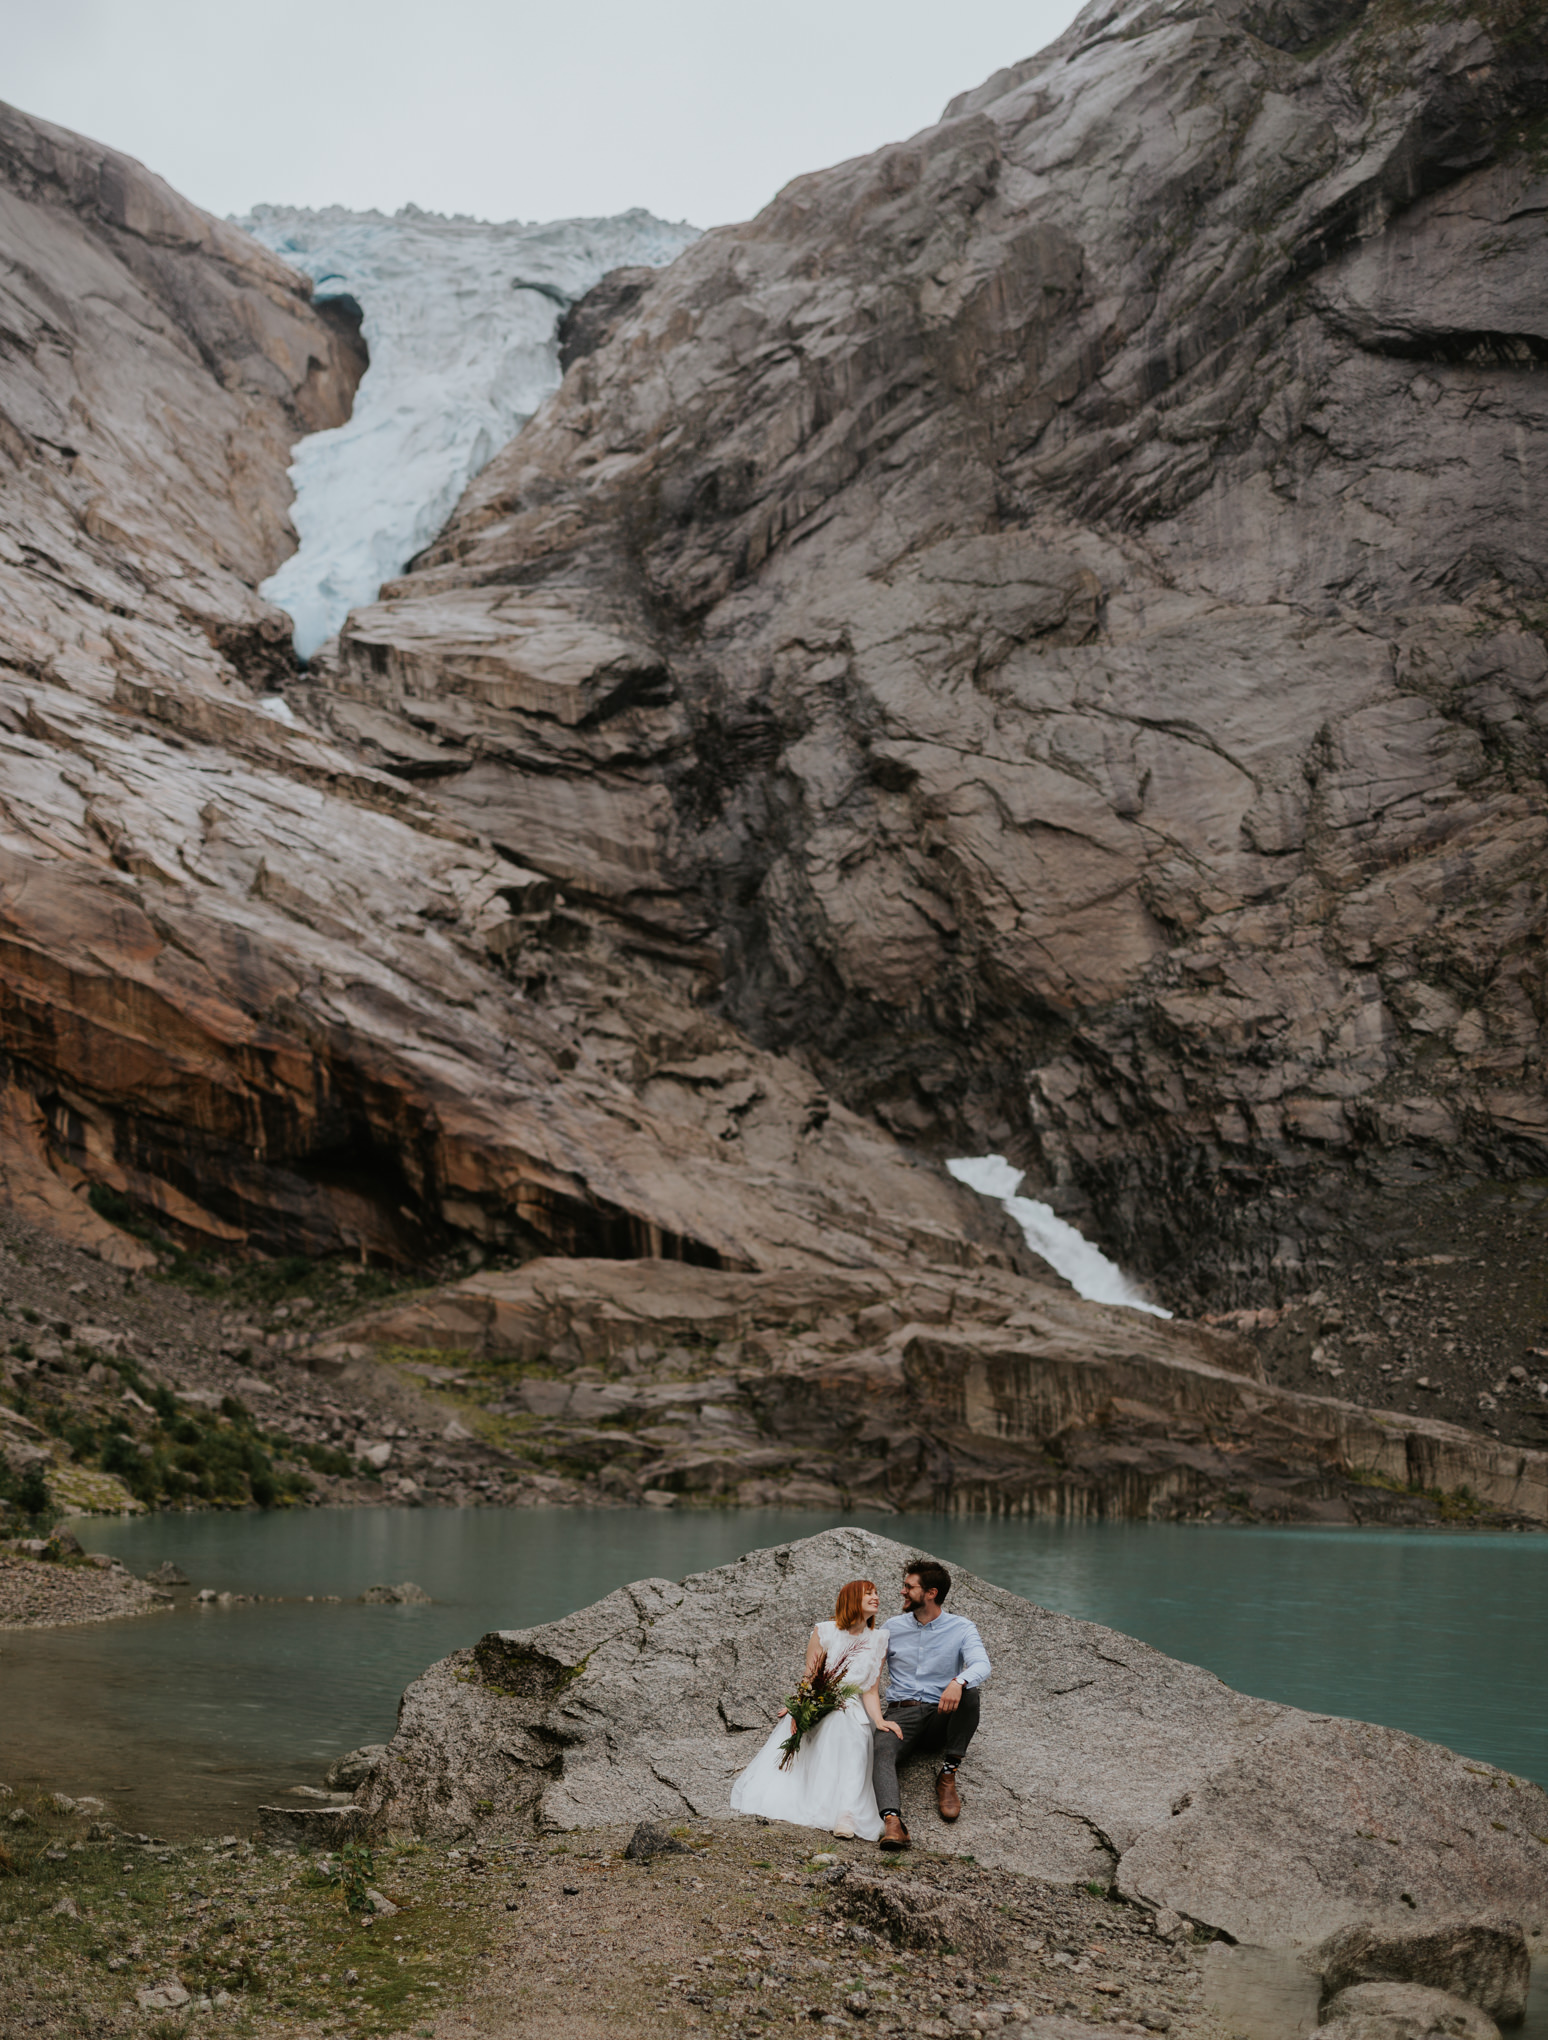 A wedding couple eloping in Norway sit under a glacier near Loenfjord